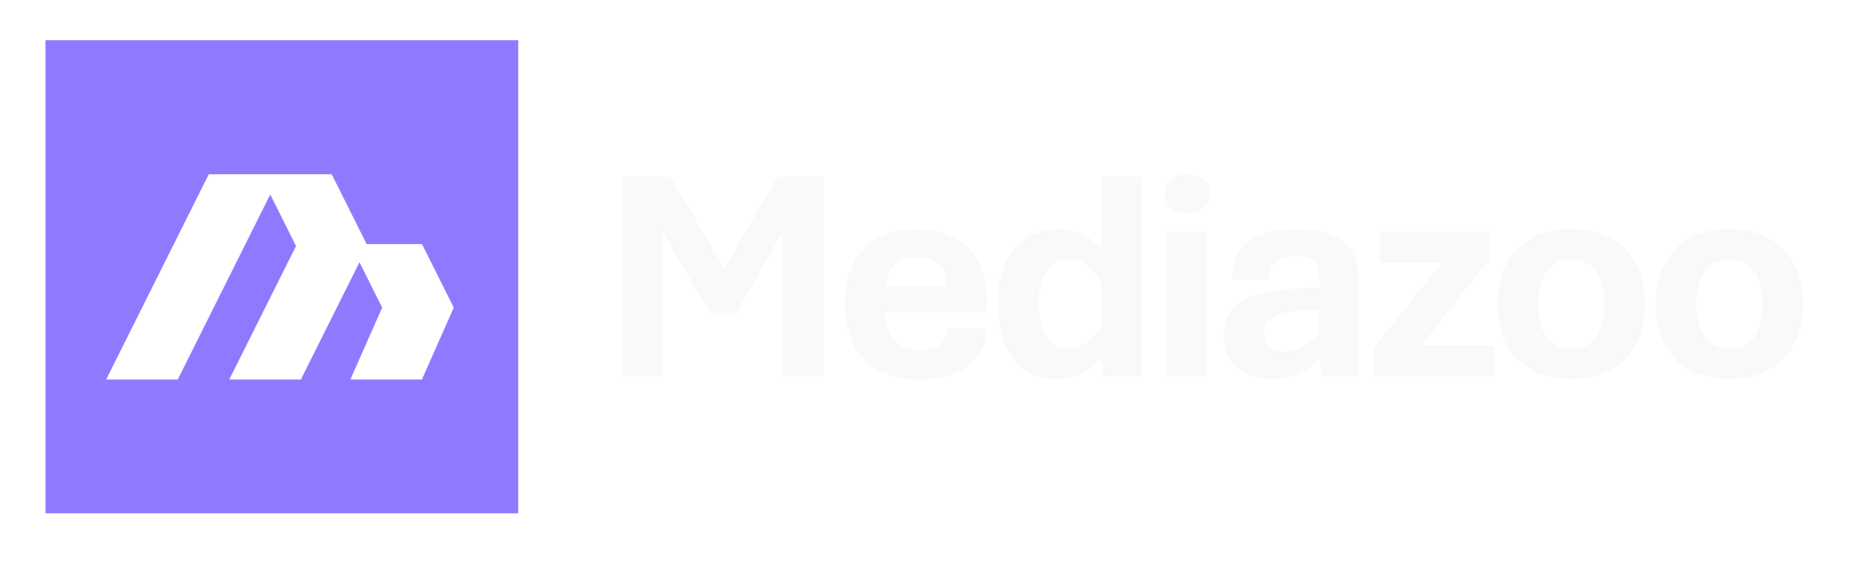 MediaZoo